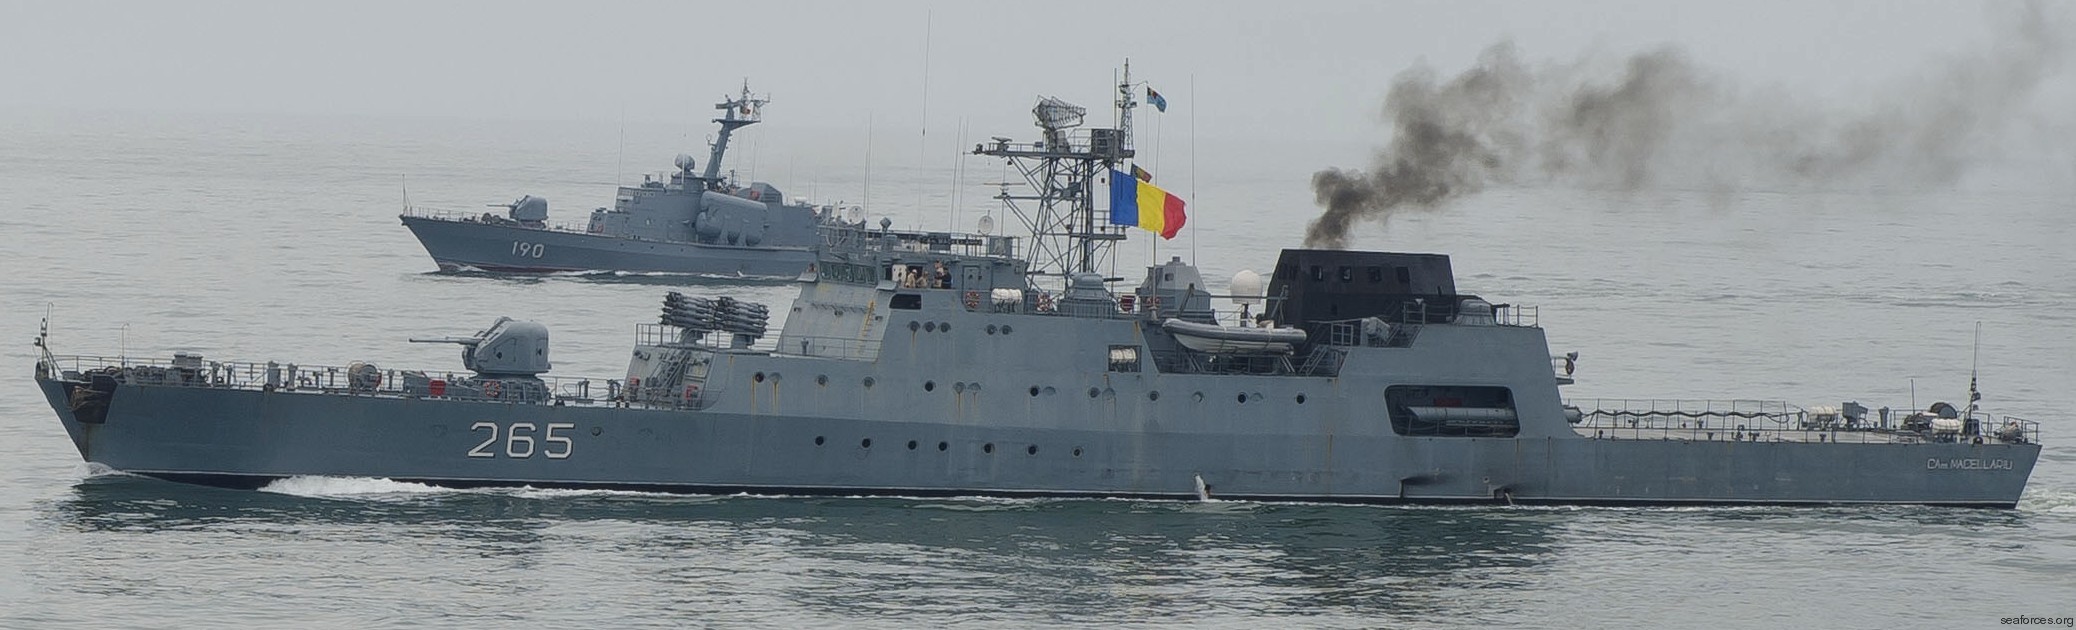 f-265 ros contraamiral horia macellariu tetal-ii class corvette romanian navy 04